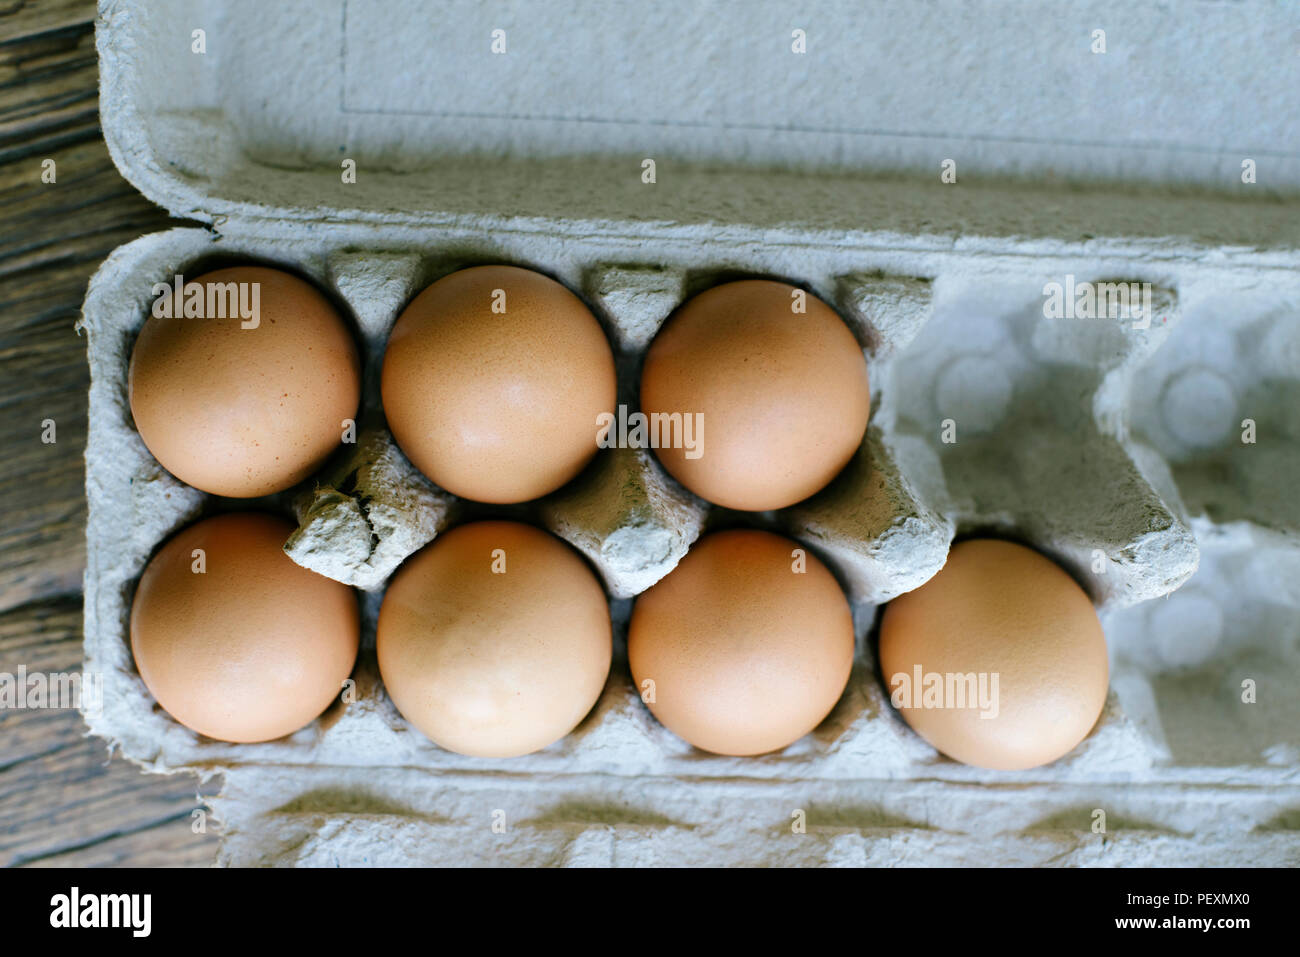 7 fresh brown eggs on a carton ready to use Stock Photo